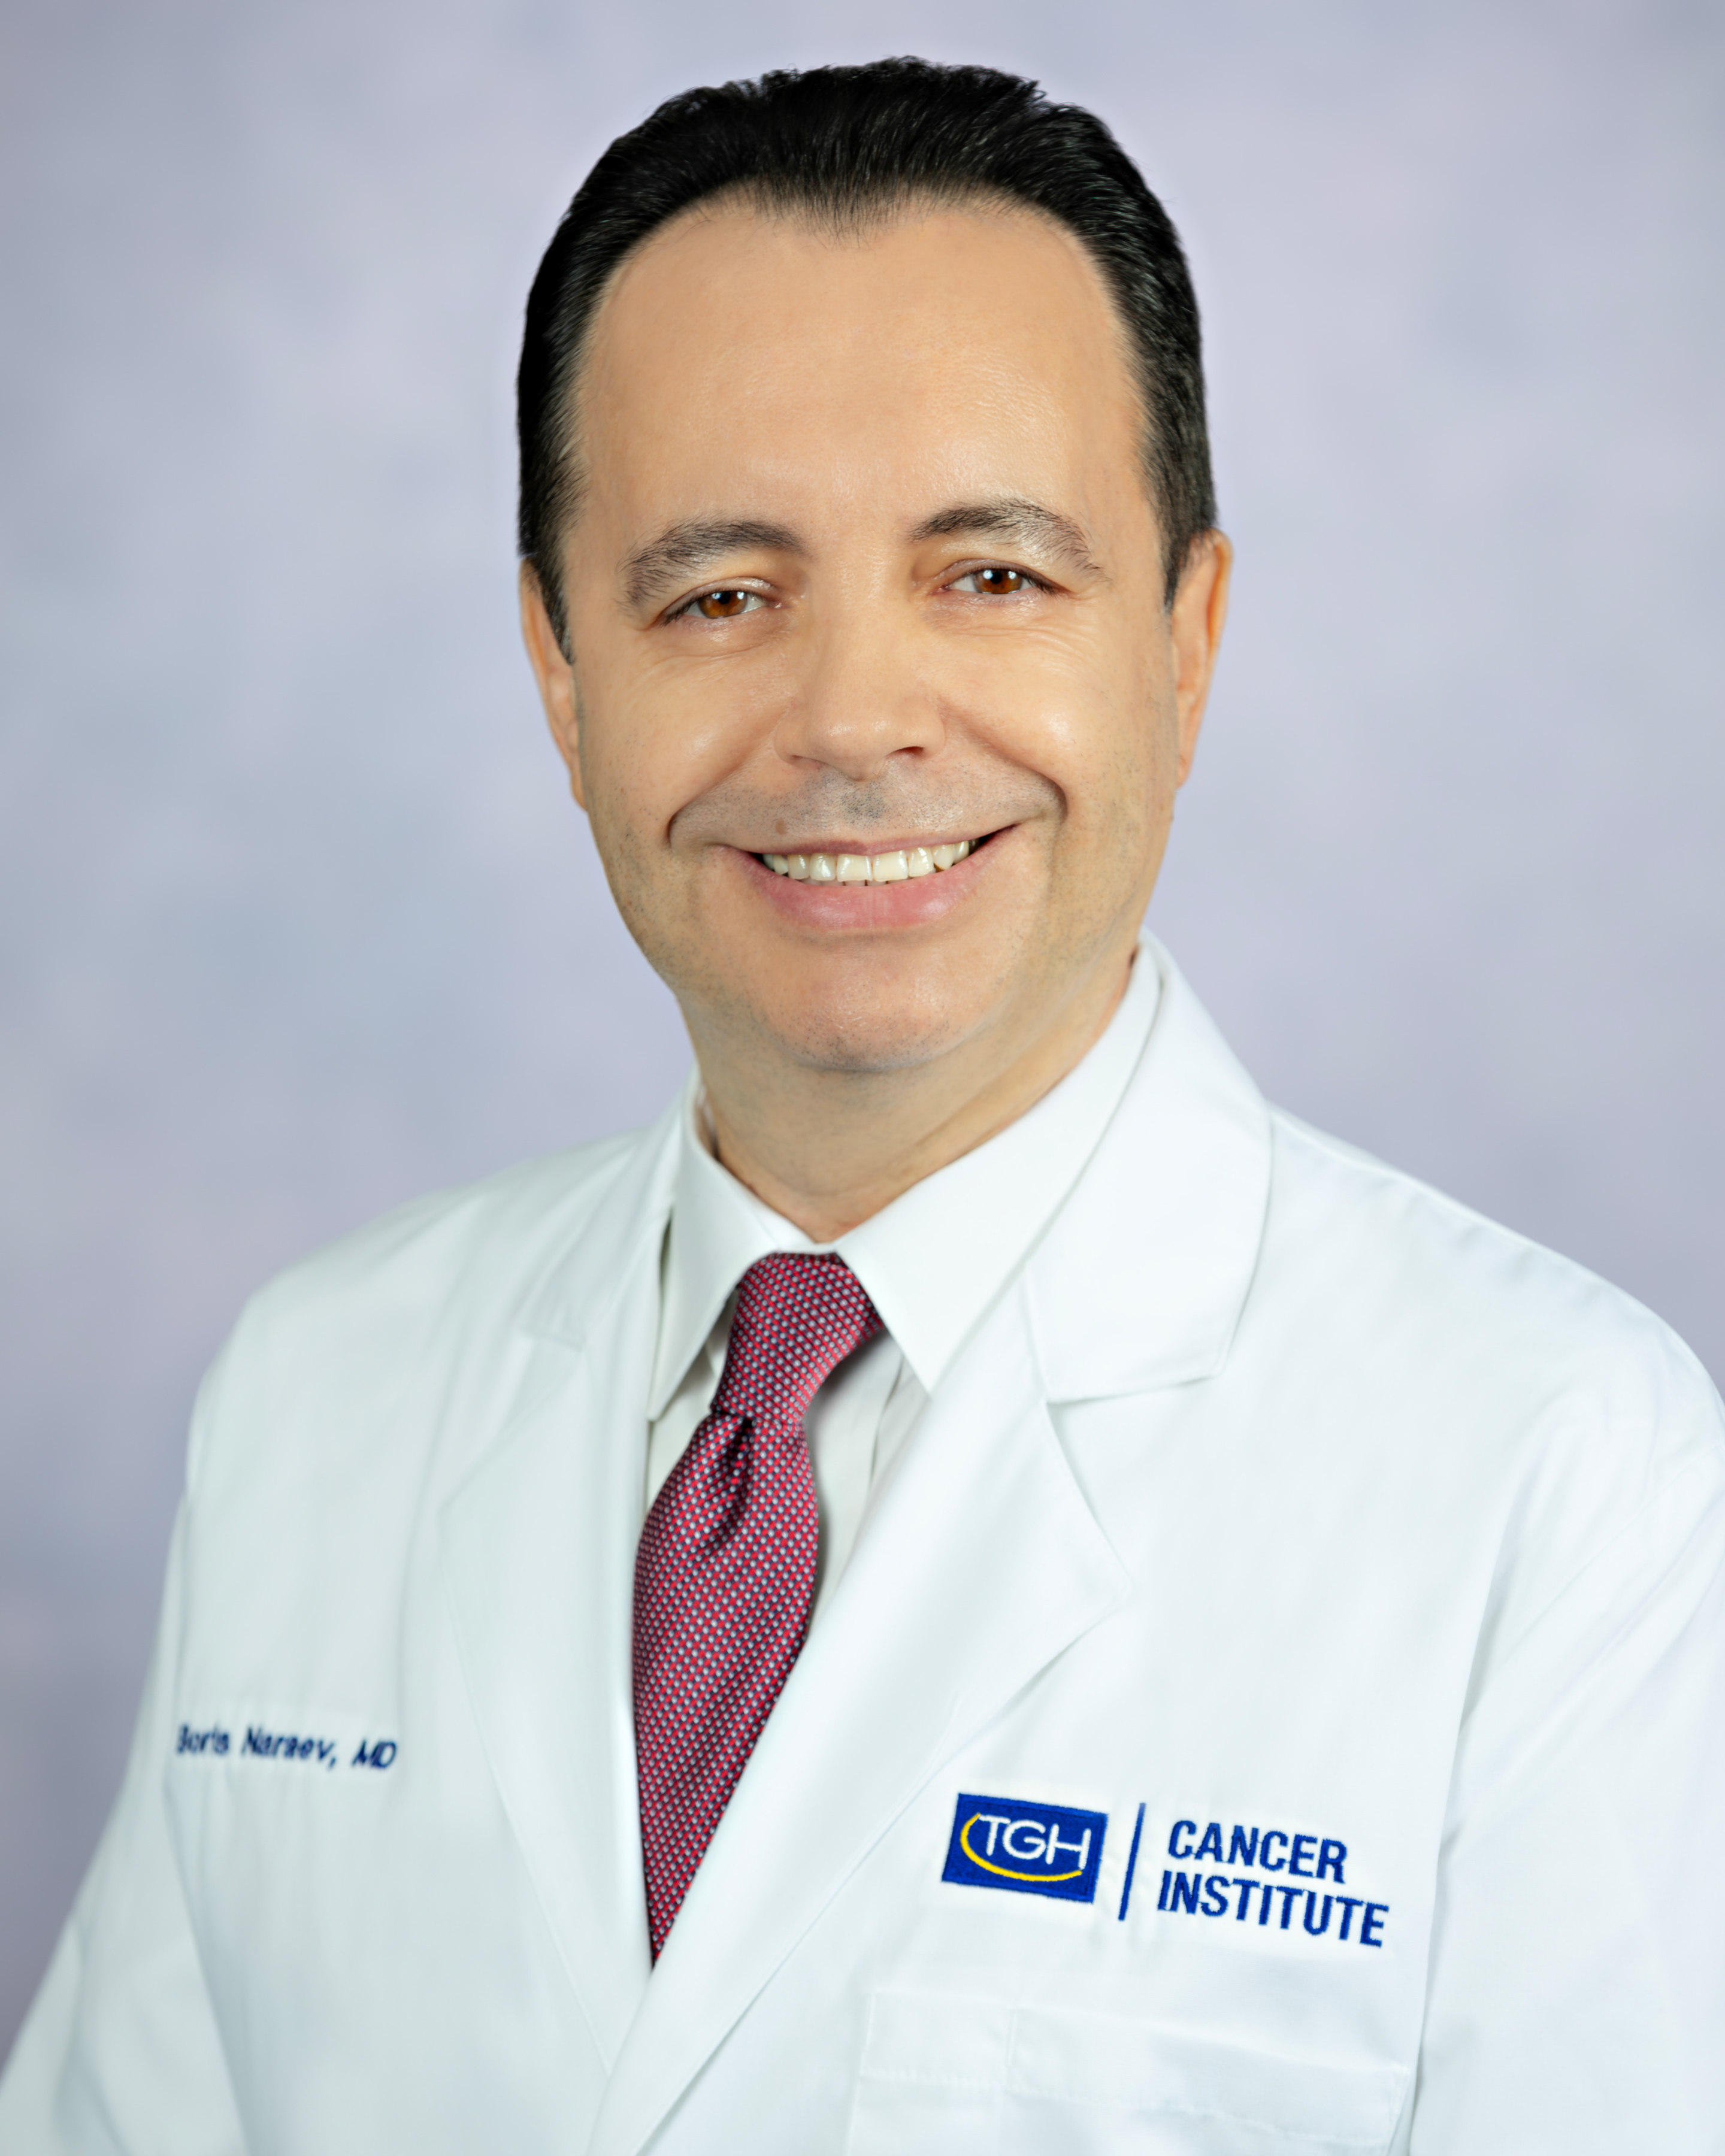 Dr. Boris Naraev, MD